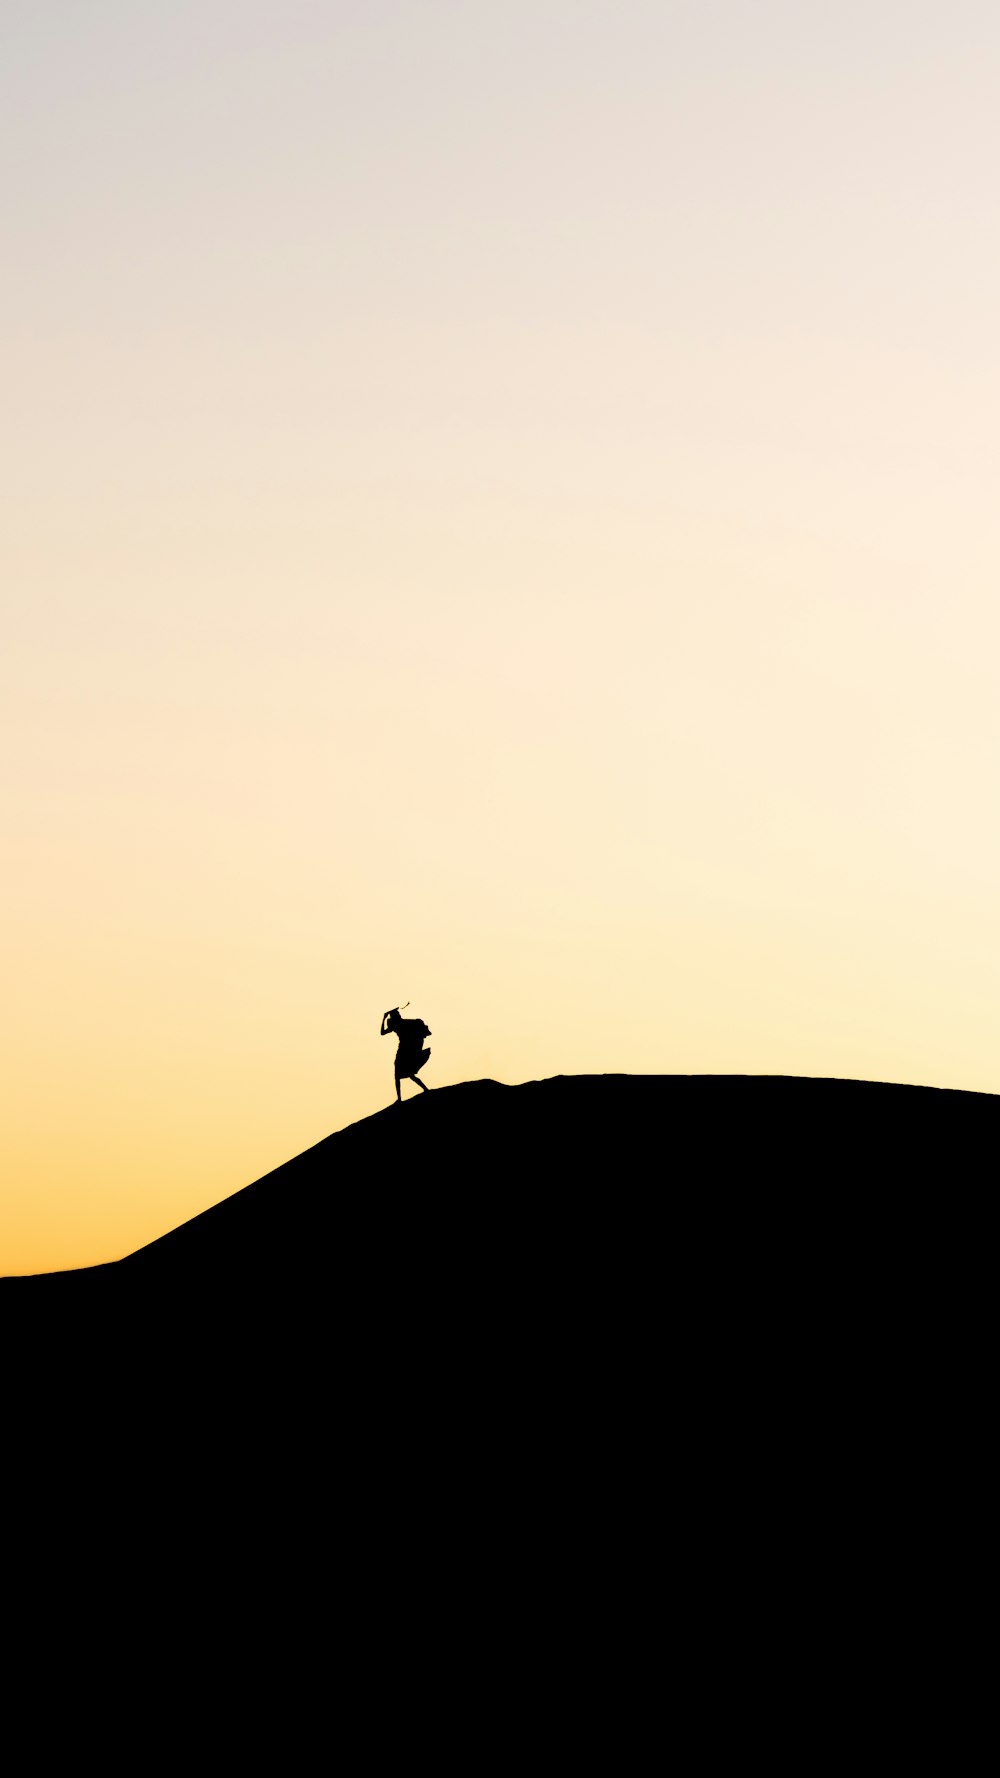 una silueta de una persona parada en la cima de una colina